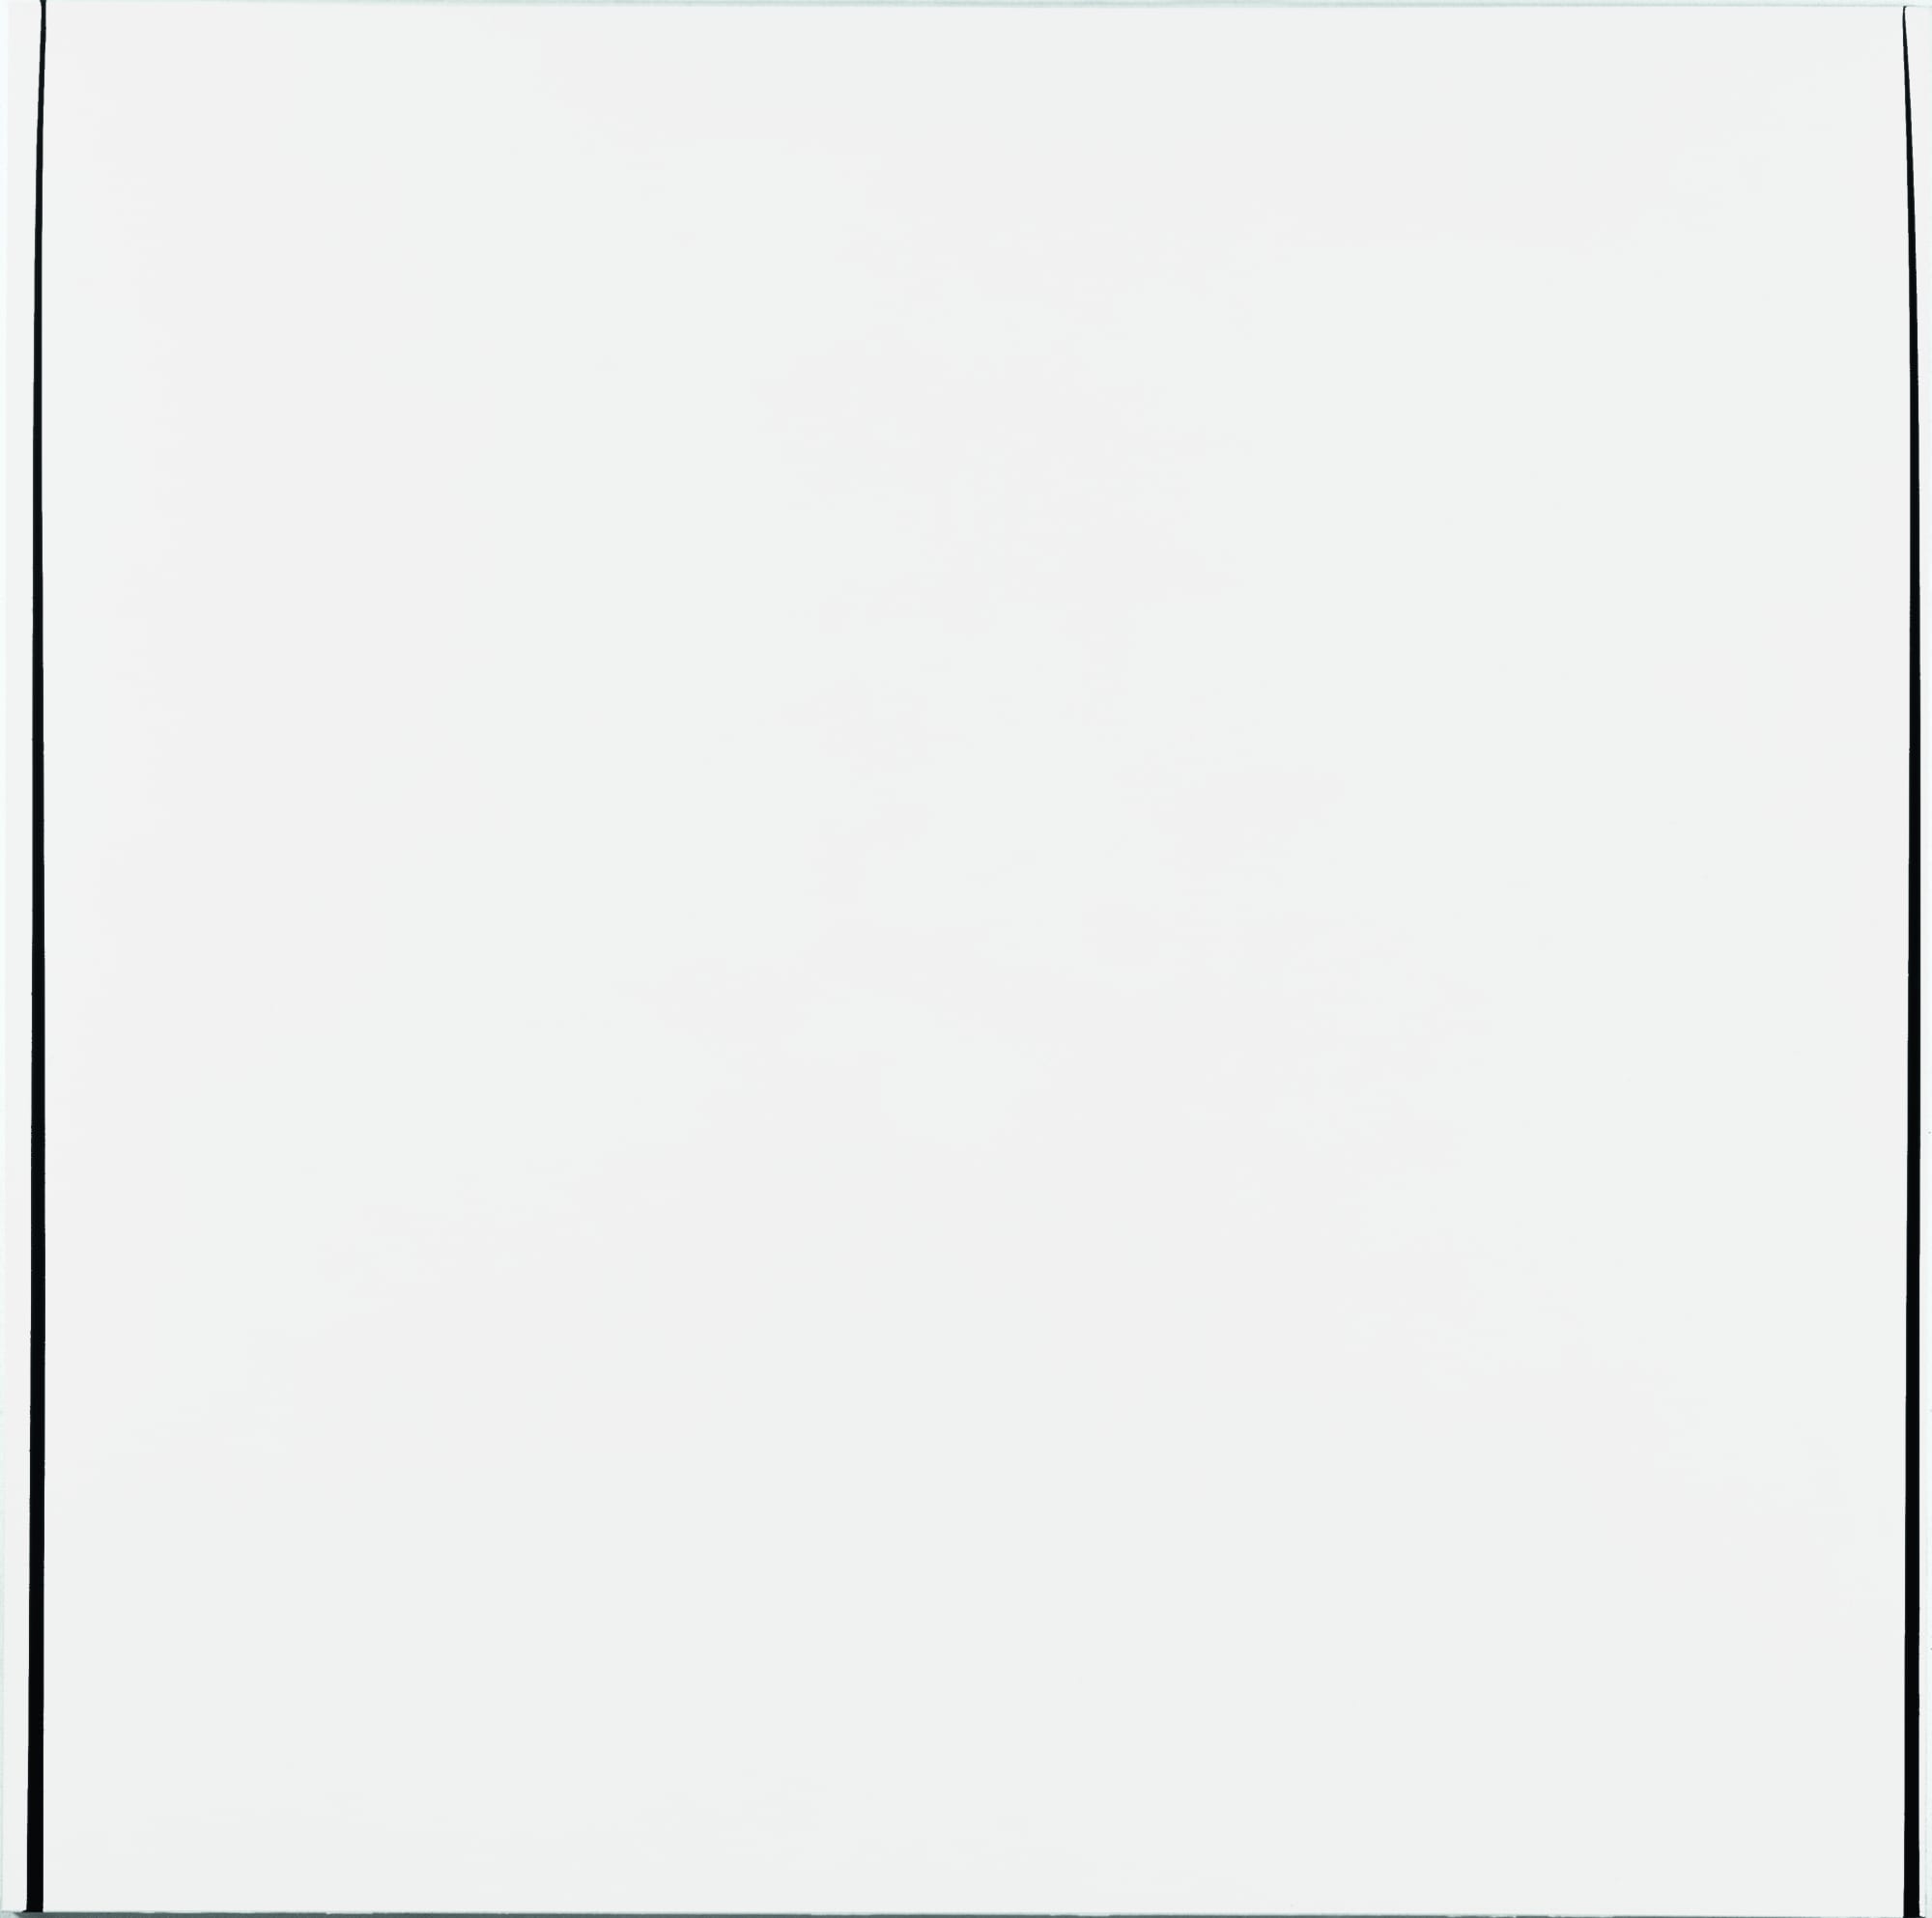 Ian Davenport, Untitled Tip Painting White, Black, White, 2004